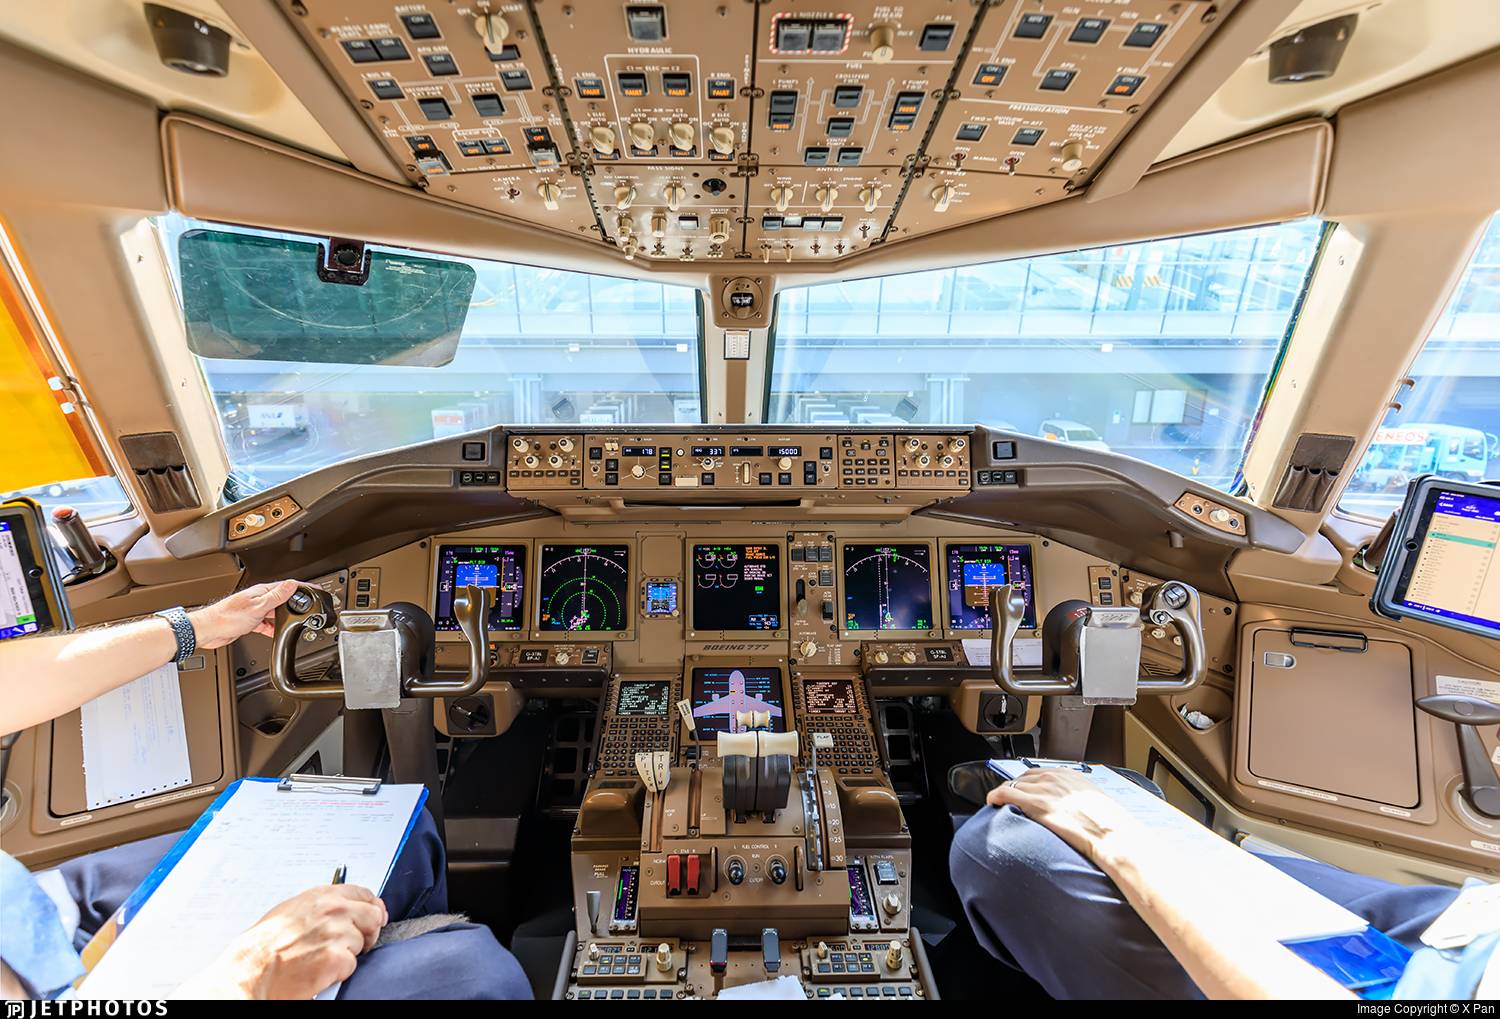 Боинг 757-200: схема салона, лучшие места